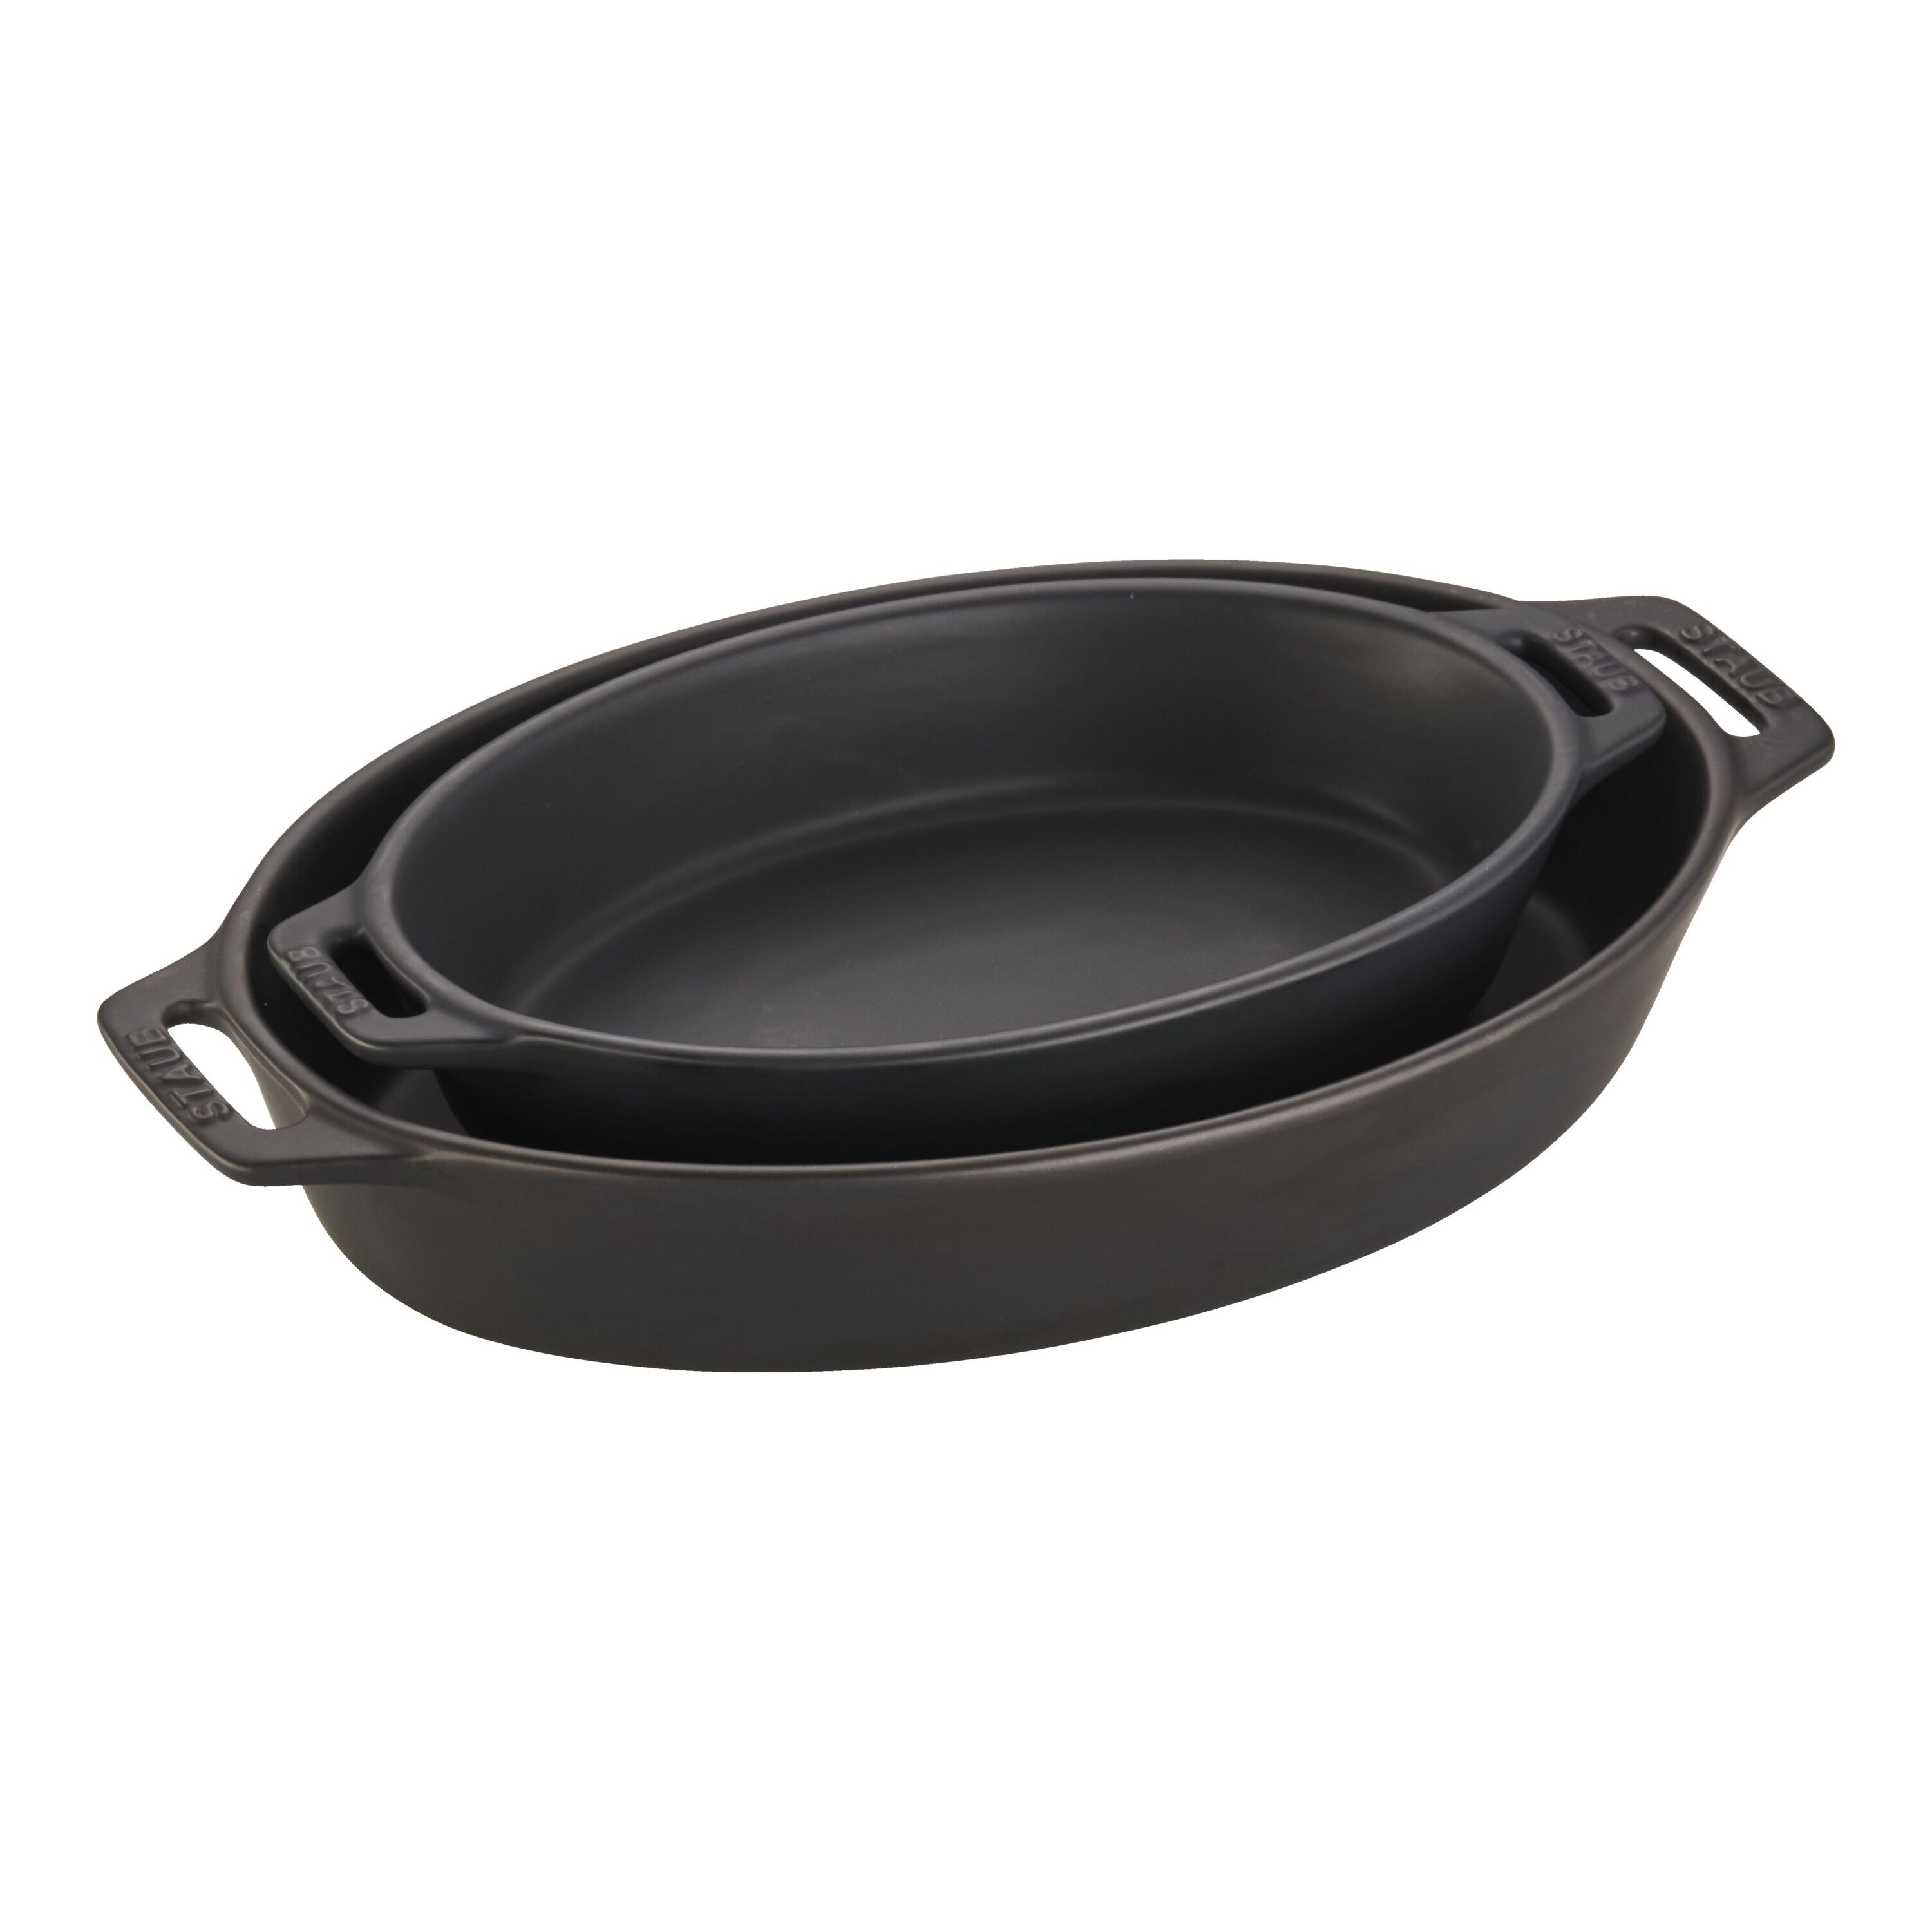  STAUB Ceramics Oval Baking Dish, 9-inch, Dark Blue